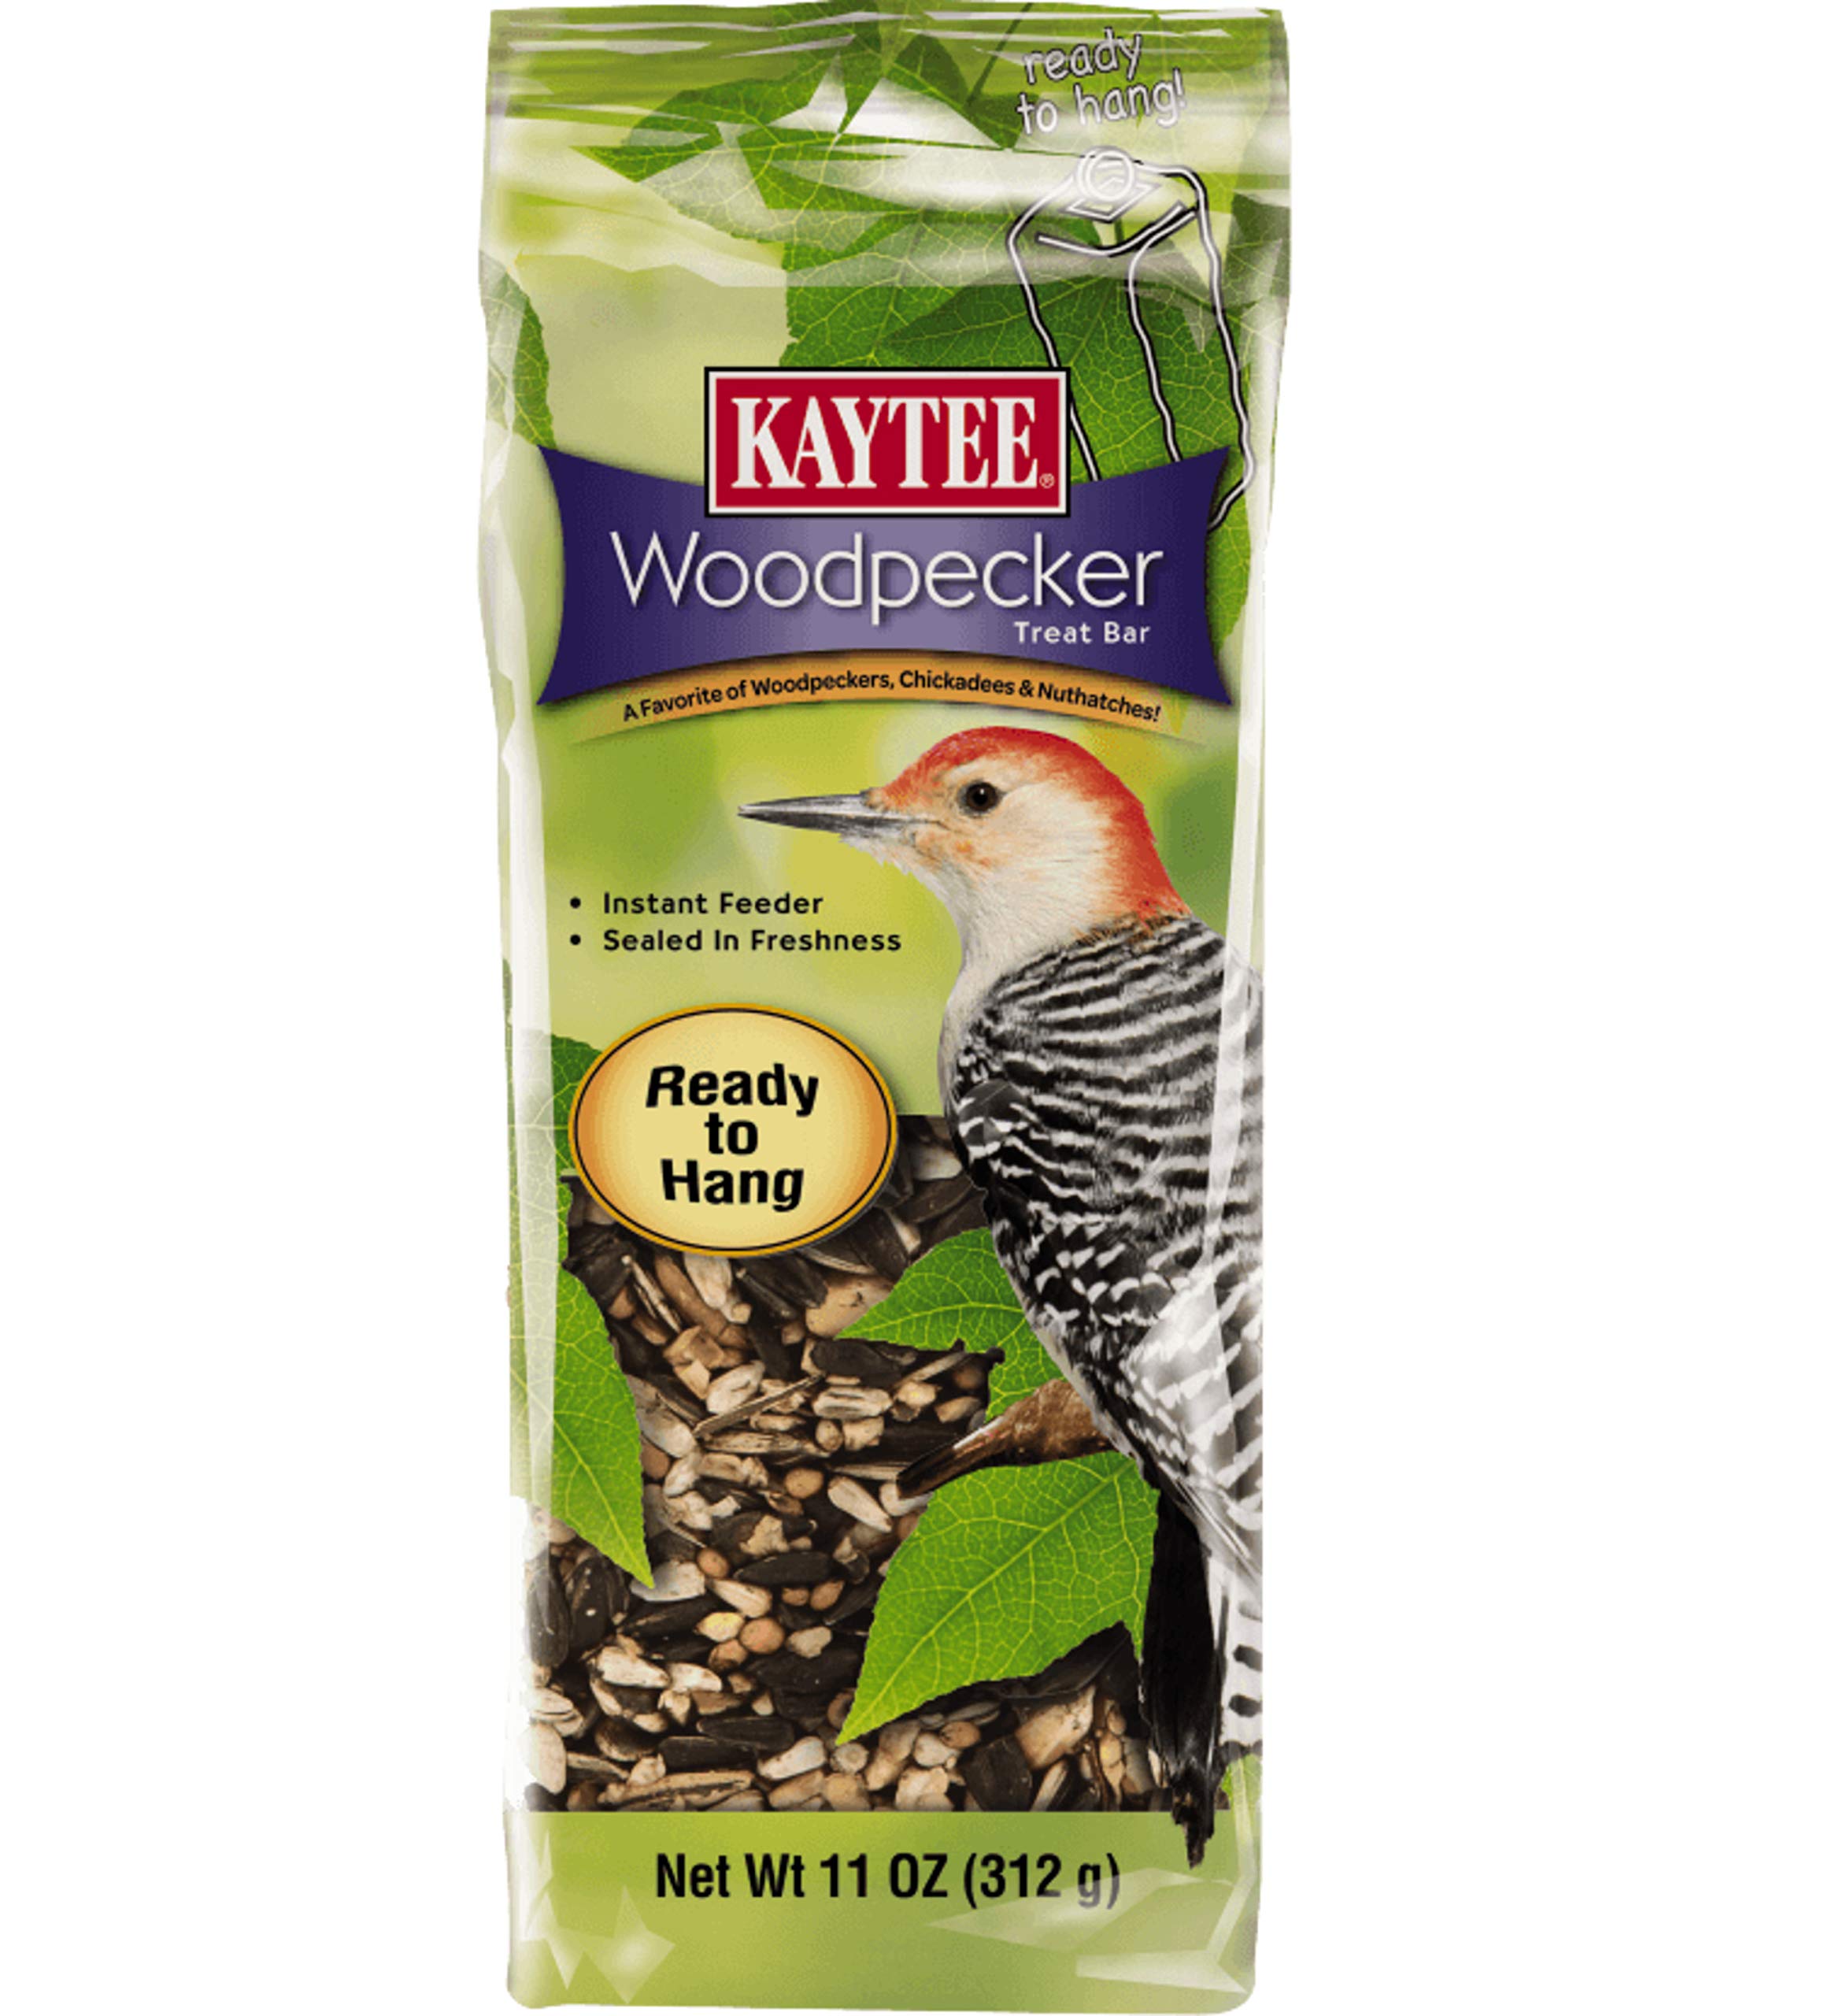 11-Oz. Kaytee Woodpecker Bird Seed Bar $3.80 + Free Shipping w/ Prime or on $25+